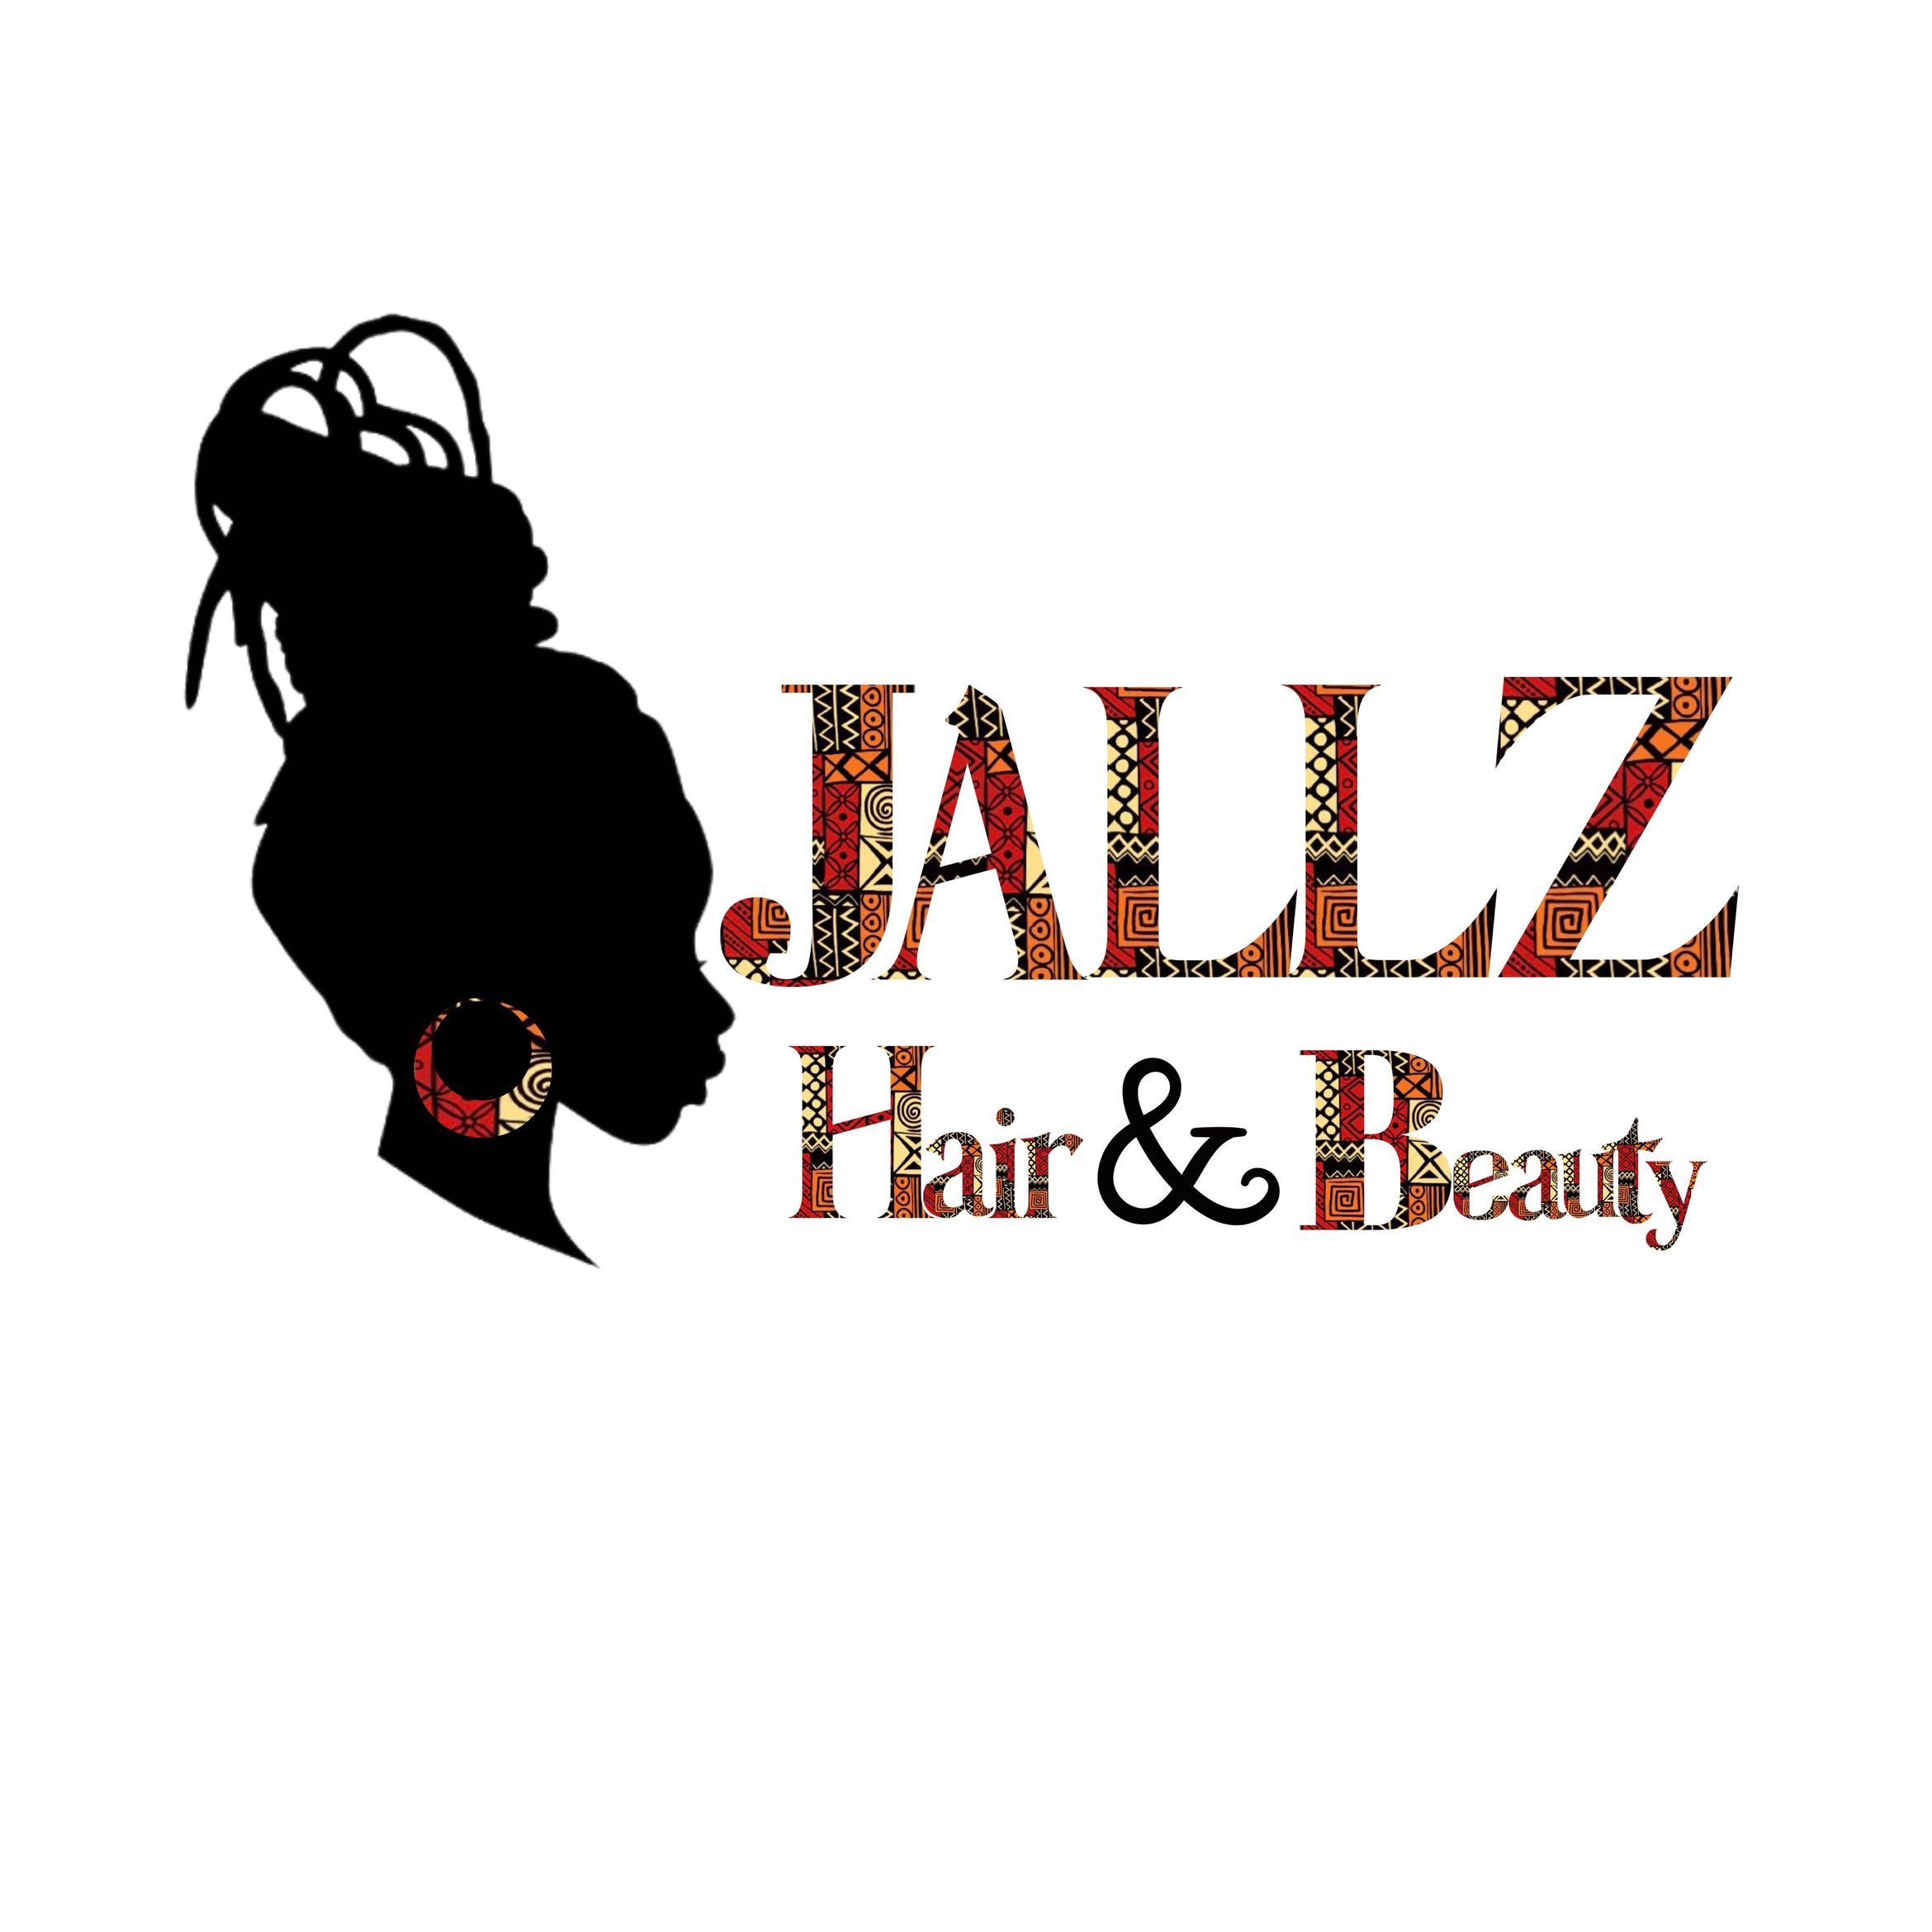 Jallz Hair&Beauty, 106 Barlow moor road, M20 2PN, Manchester